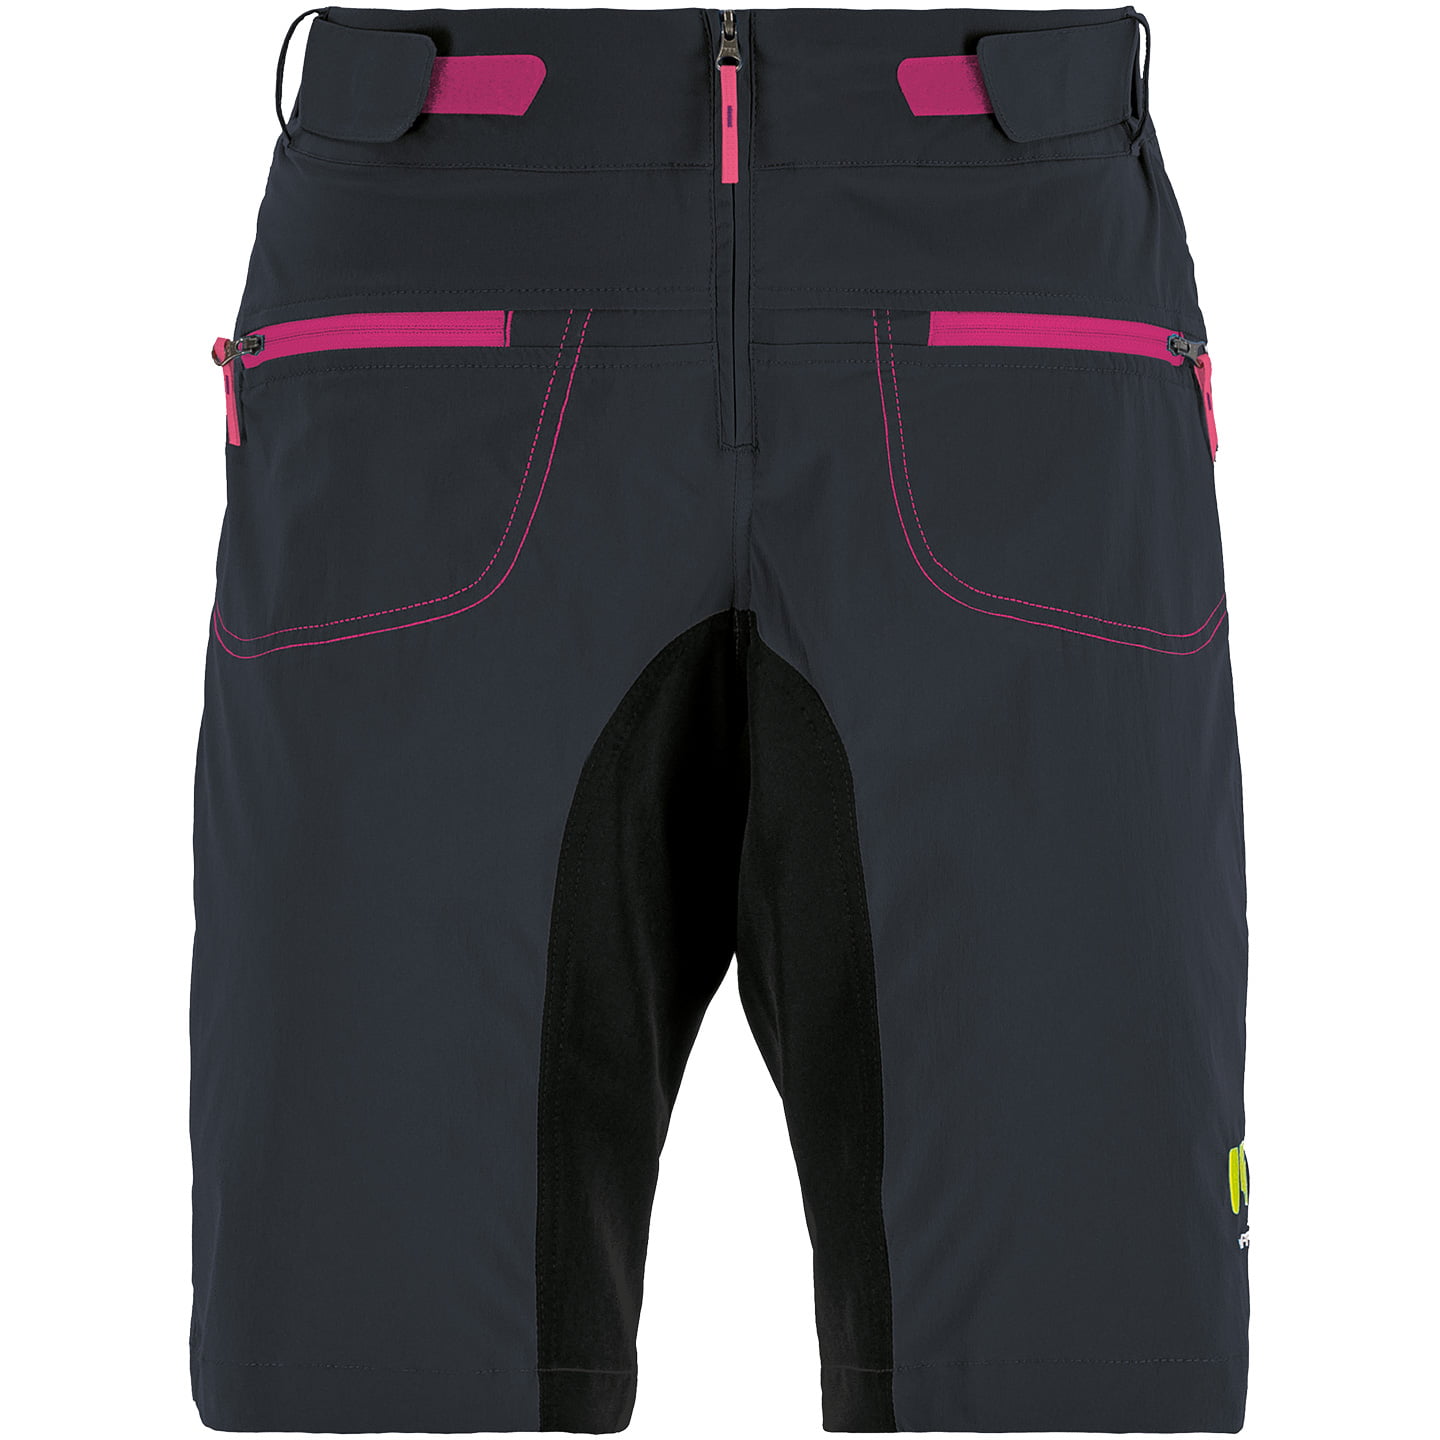 KARPOS Ballistic w/o Pad Women’s Bike Shorts, size XL, MTB shorts, MTB clothing